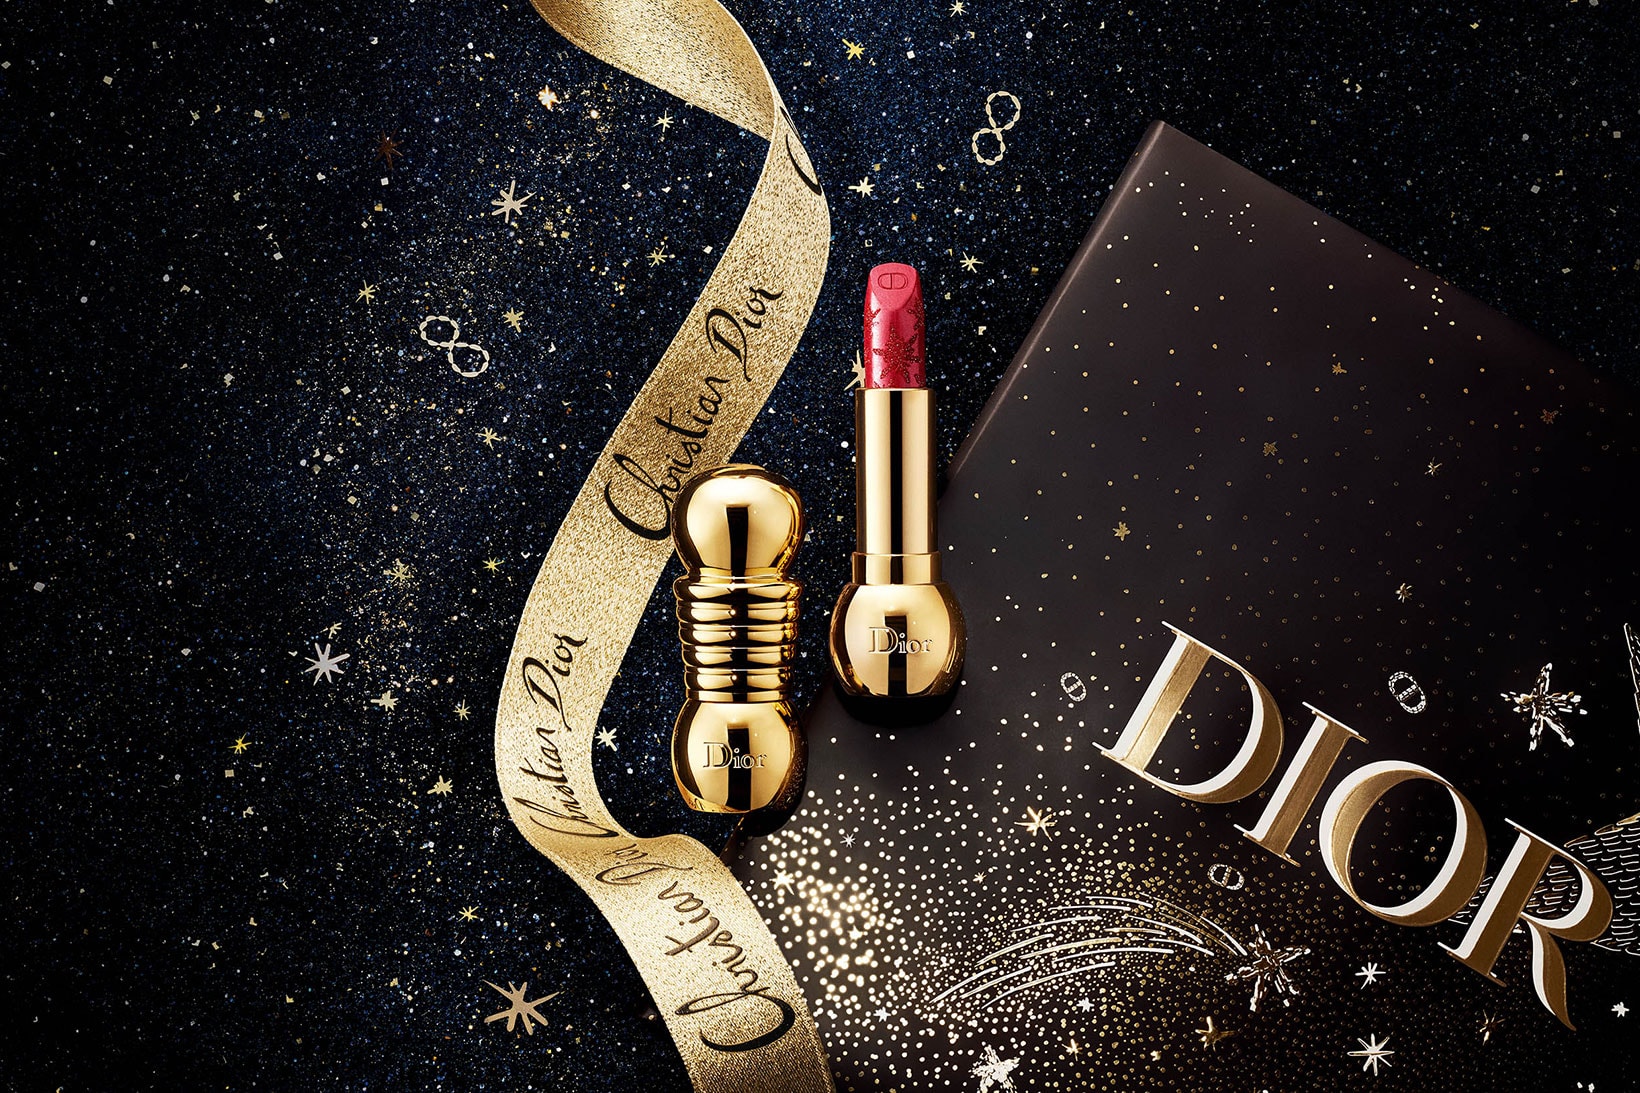 dior makeup holiday collection golden nights forever cushion powder eyeshadow palettes diorific lipsticks price